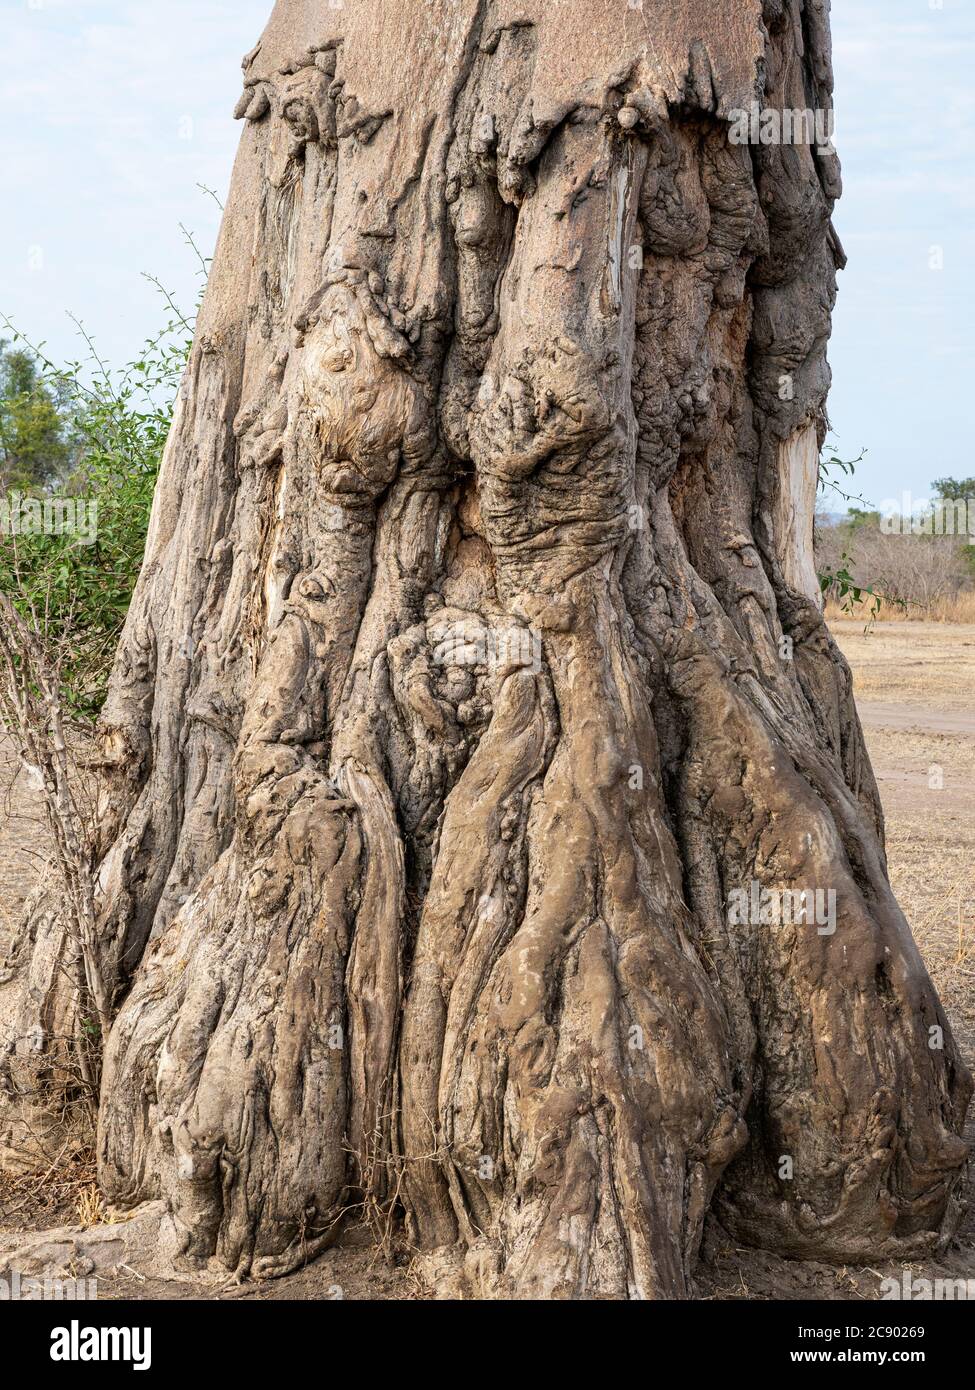 A very large baobab tree, Adansonia digitata, showing elephant foraging damage in South Luangwa National Park, Zambia. Stock Photo